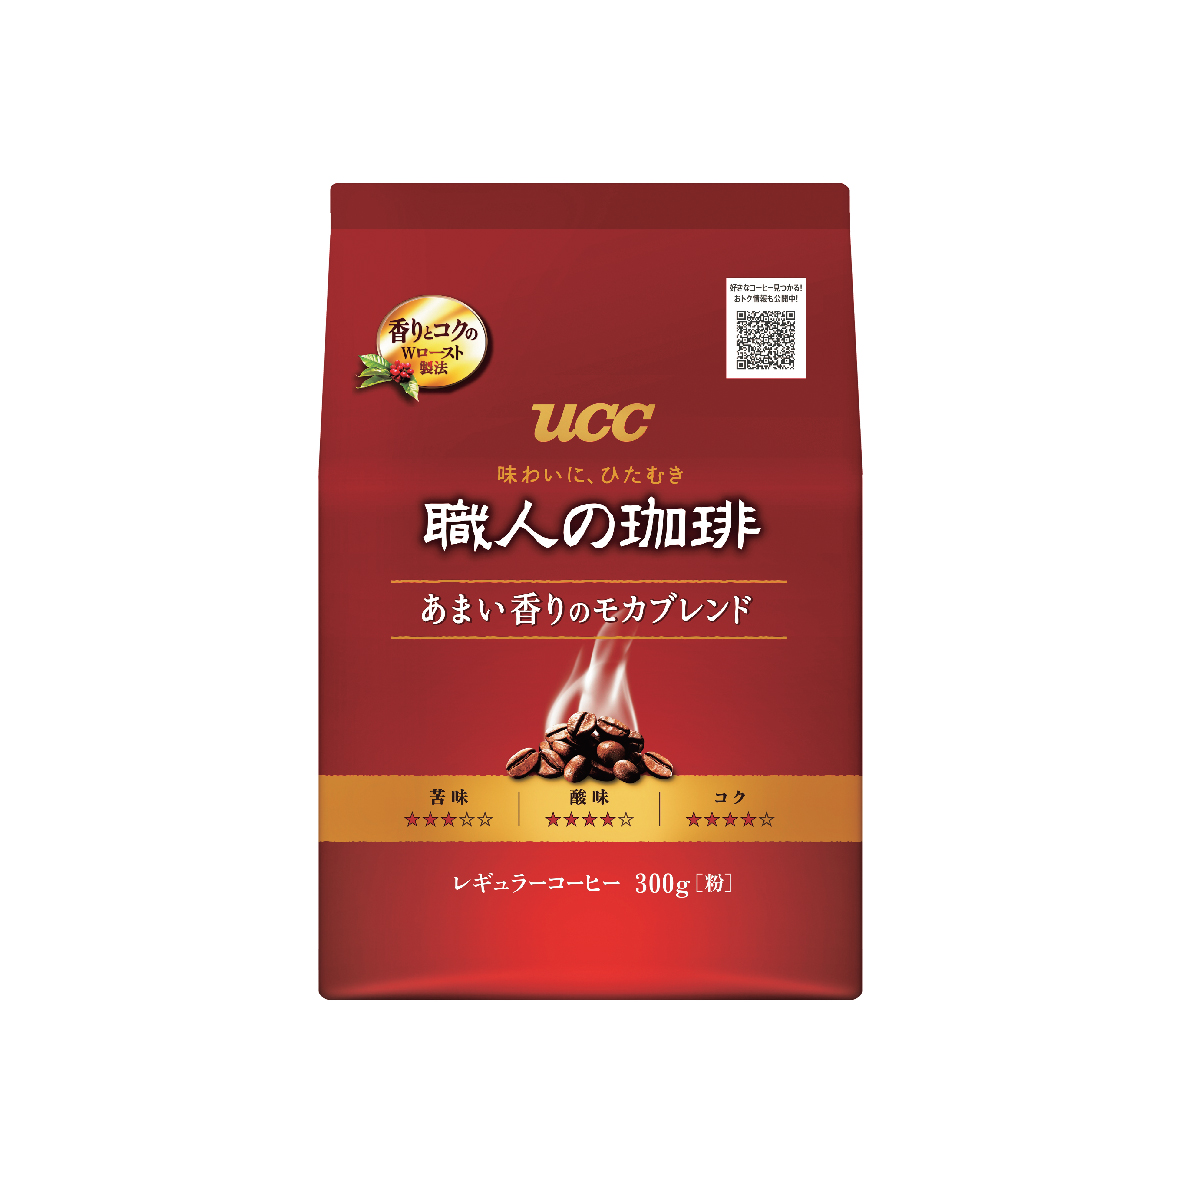 UCC Craftsman’s Coffee Mocha Roasted Coffee